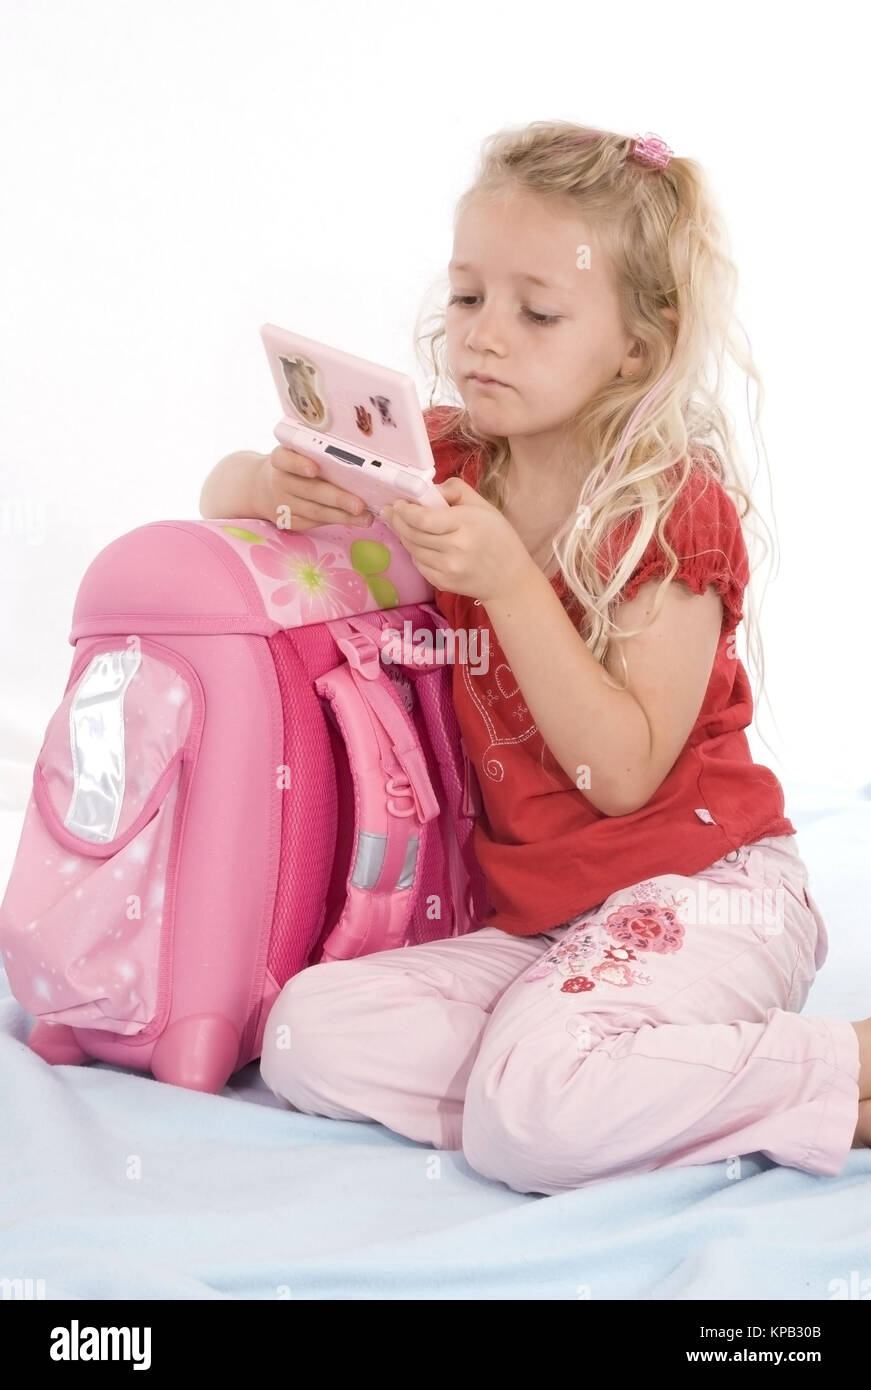 Model release, Schulmaedchen mit Computerspiel - school girl with computer game Stock Photo